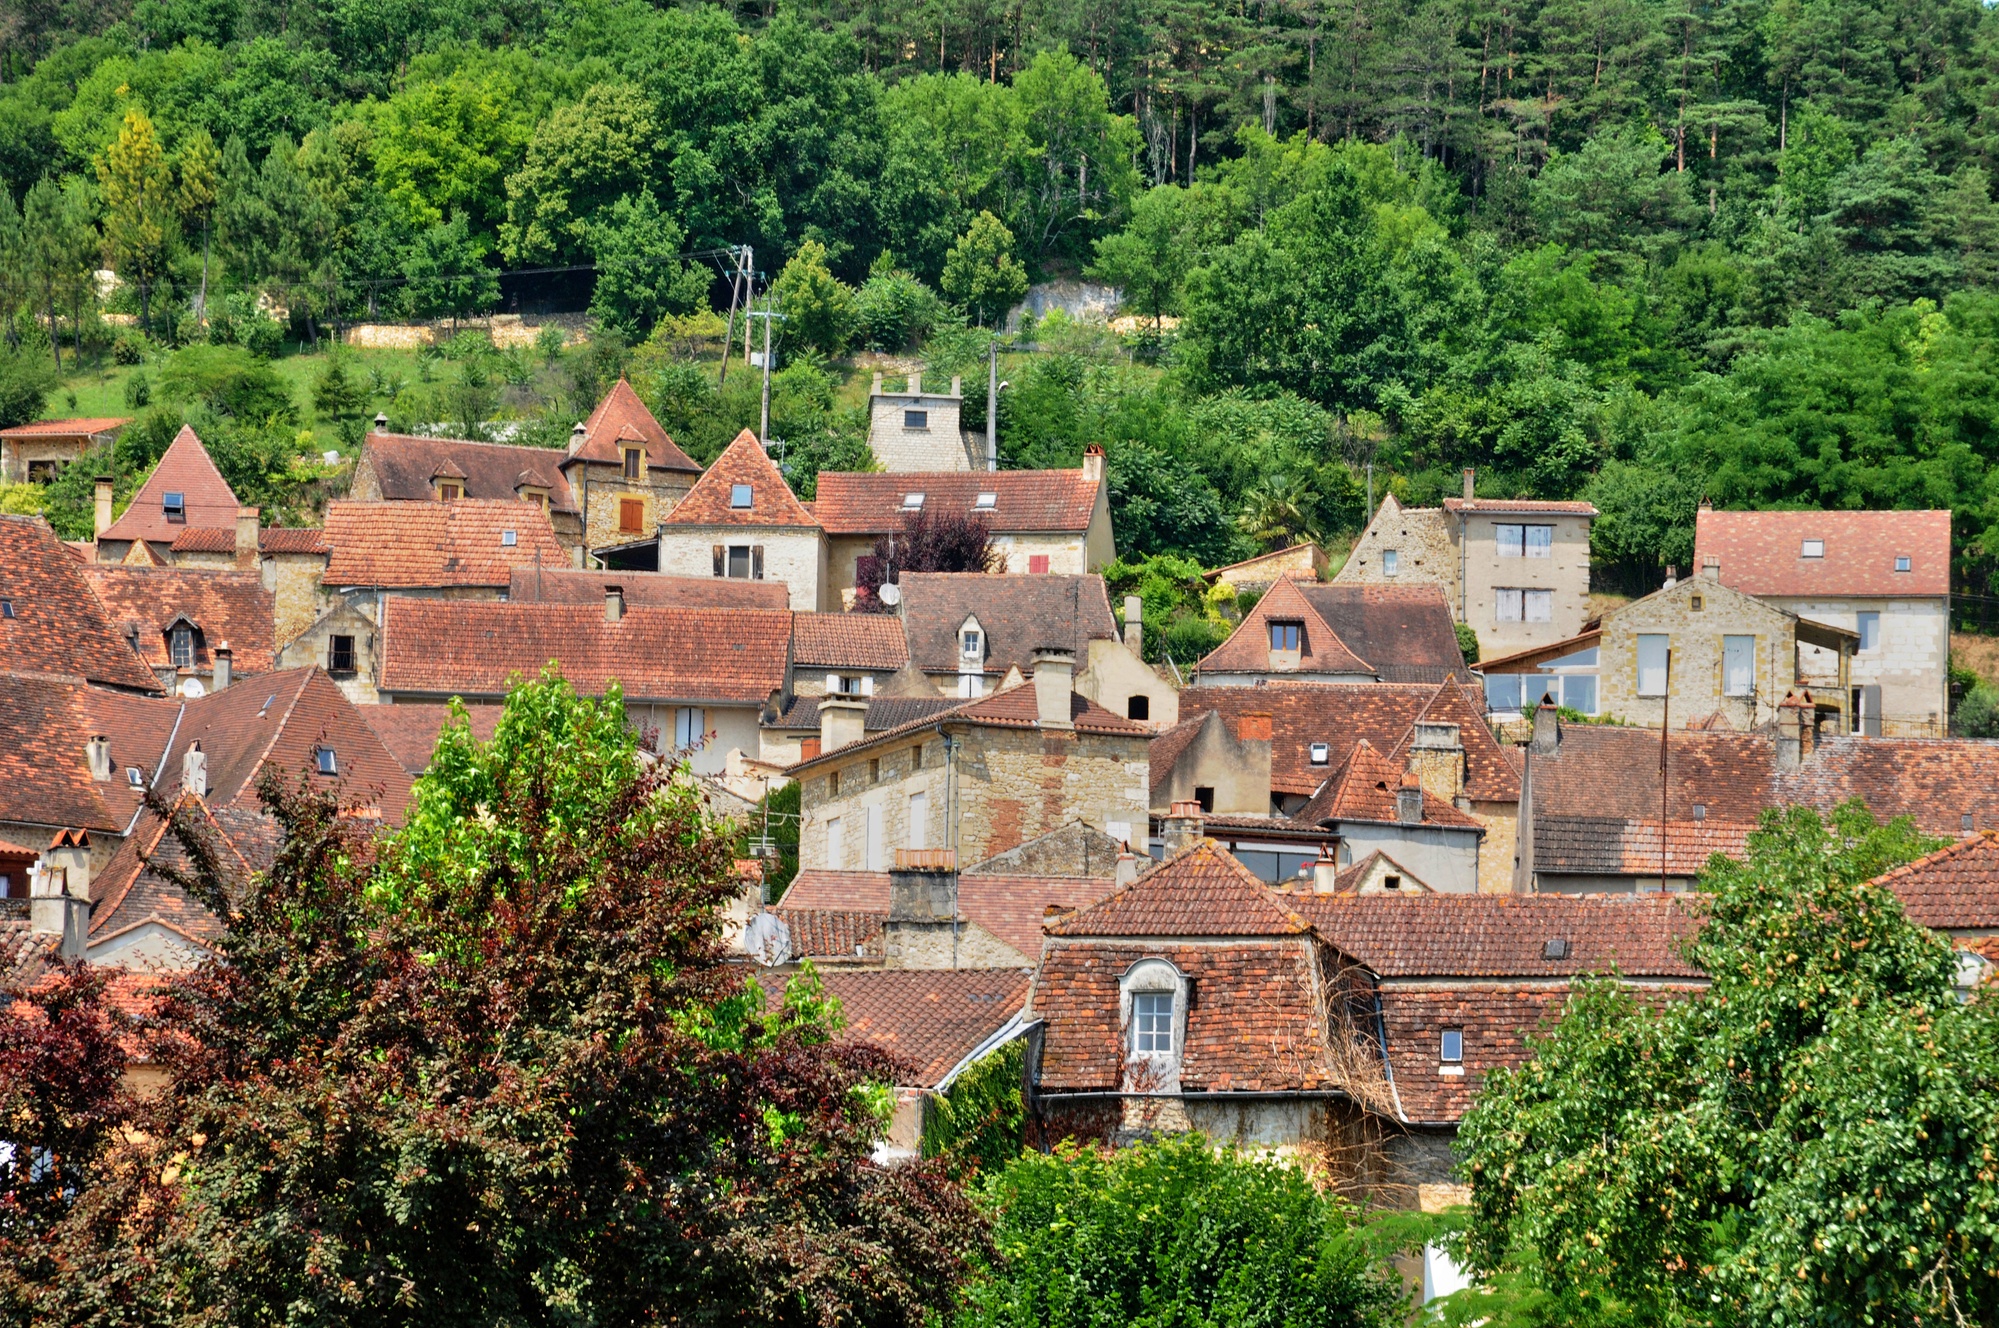 The picturesque village of Saint Cyprien in Dordogne, France